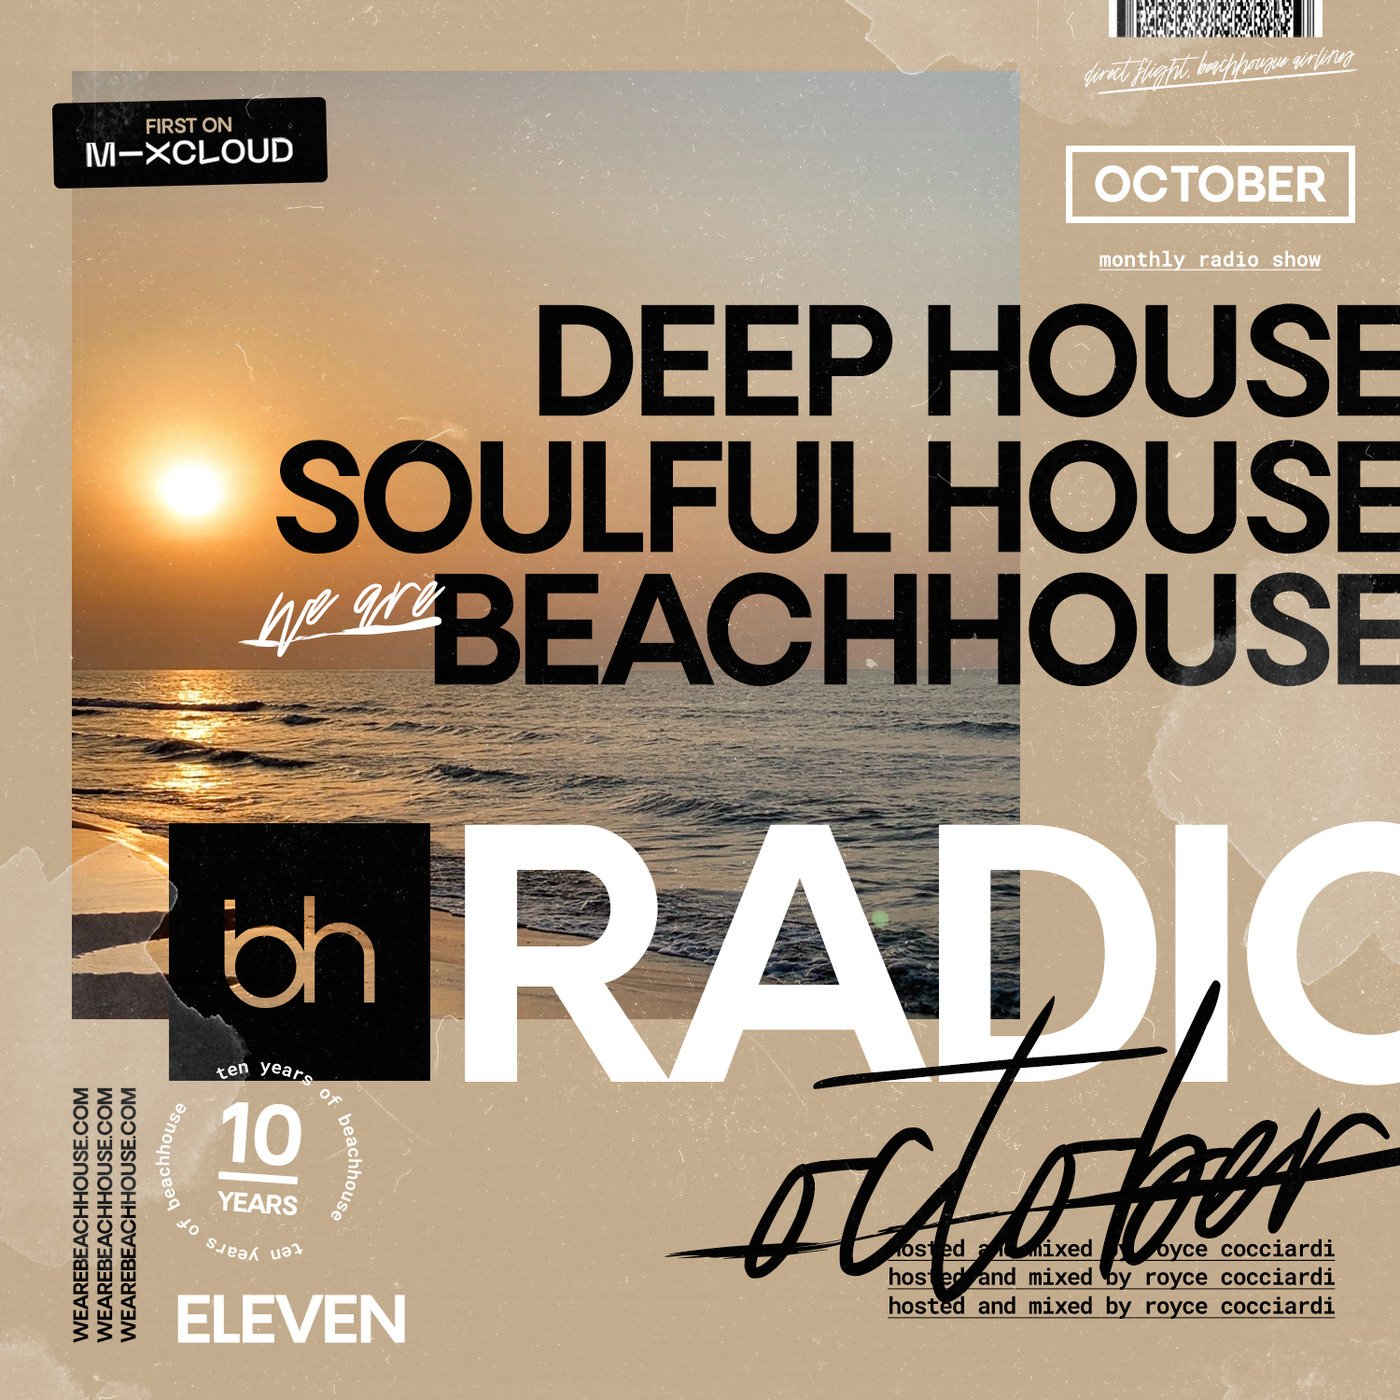 Beachhouse RADIO - October 2020 - Episode 11